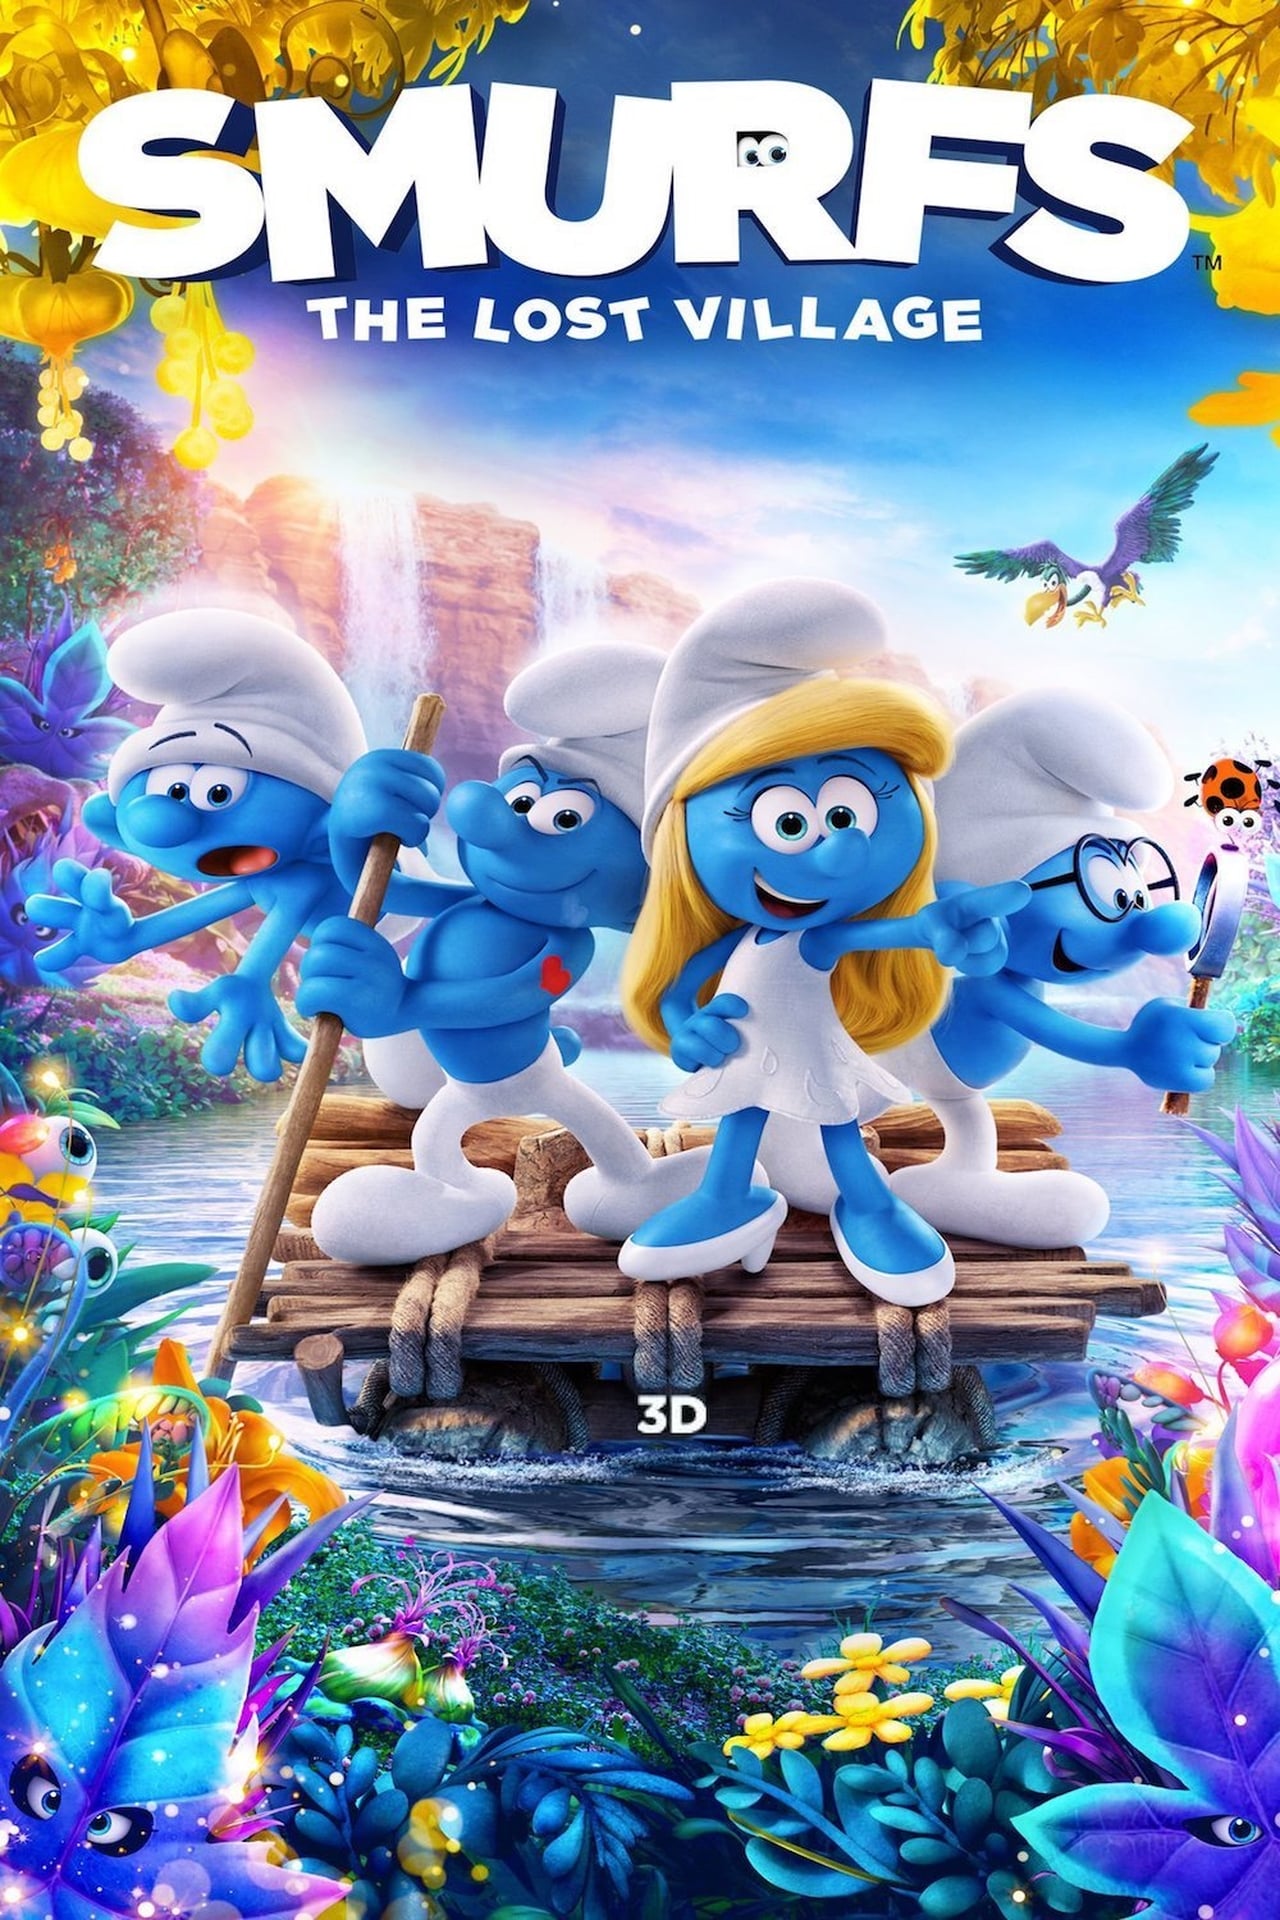 Smurfs The Lost Village Movie Synopsis, Summary, Plot & Film Details